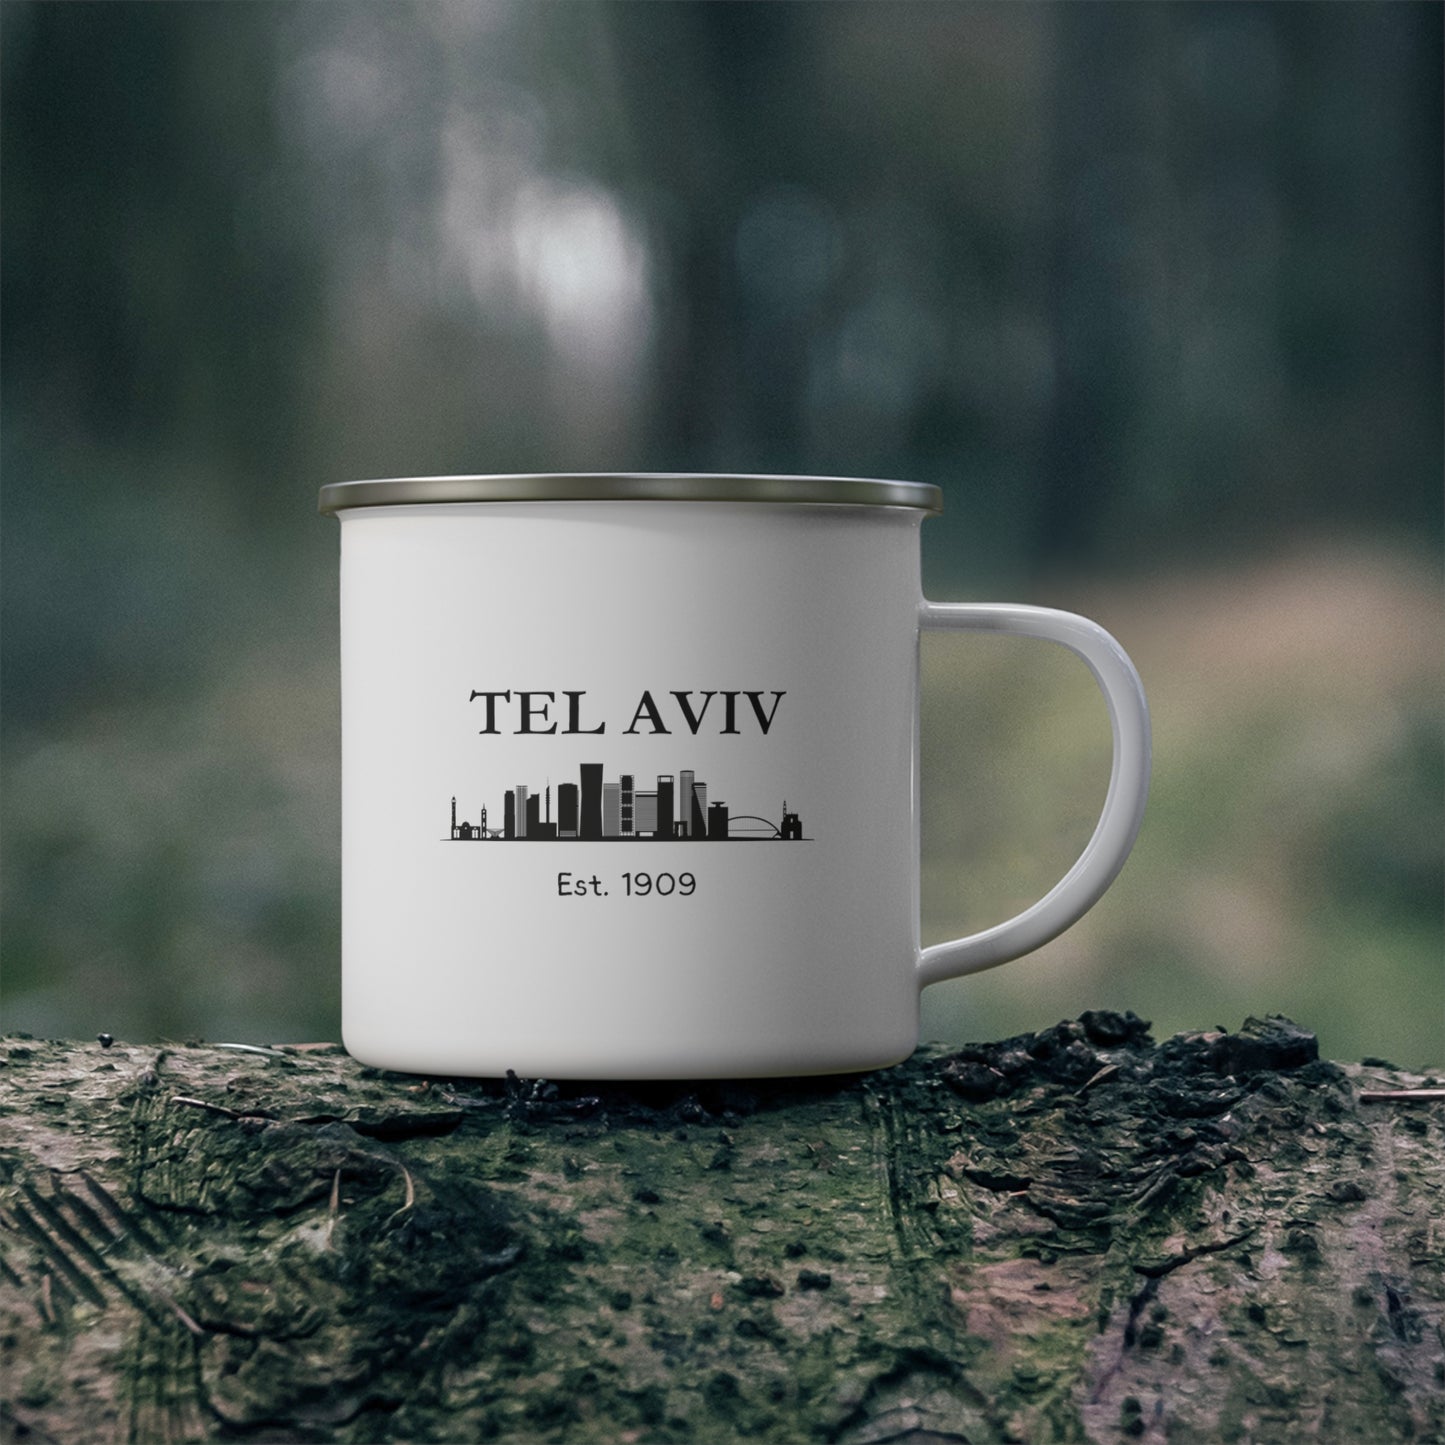 Tel Aviv - Est. 1909... Enamel Camping Mug